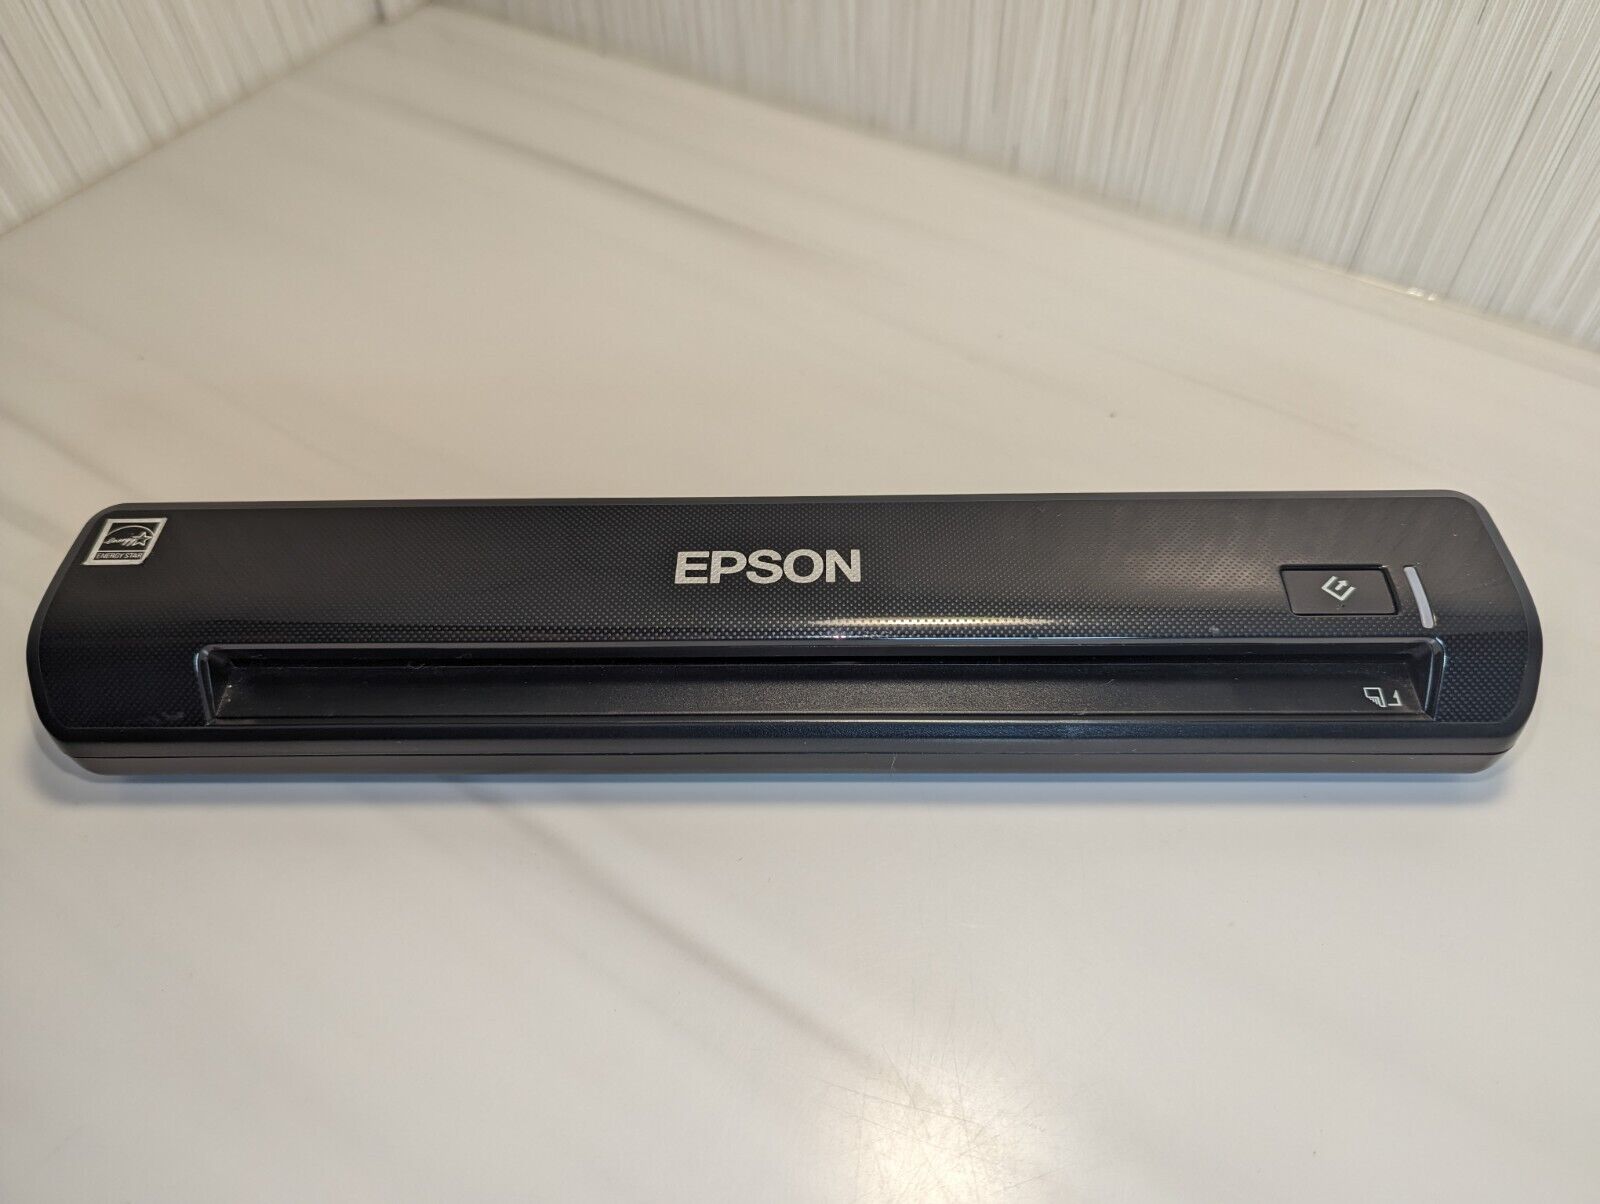 Epson WorkForce DS-30 Portable Document Scanner - Black - J291a Good Condition 